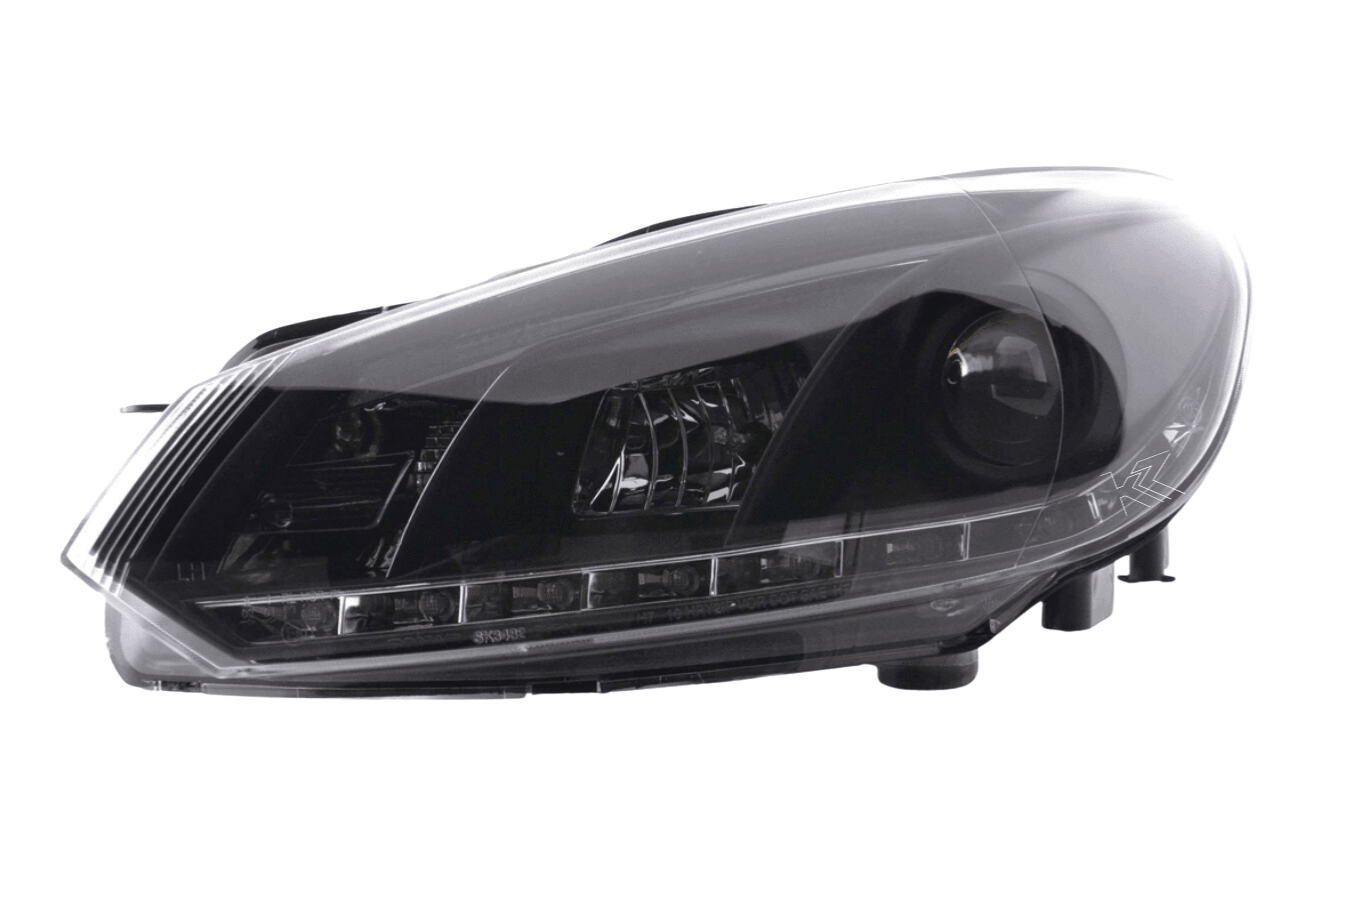 Volkswagen Golf 6 Black LED Headlights with Daytime Running Lights (2008-2014) - K2 Industries